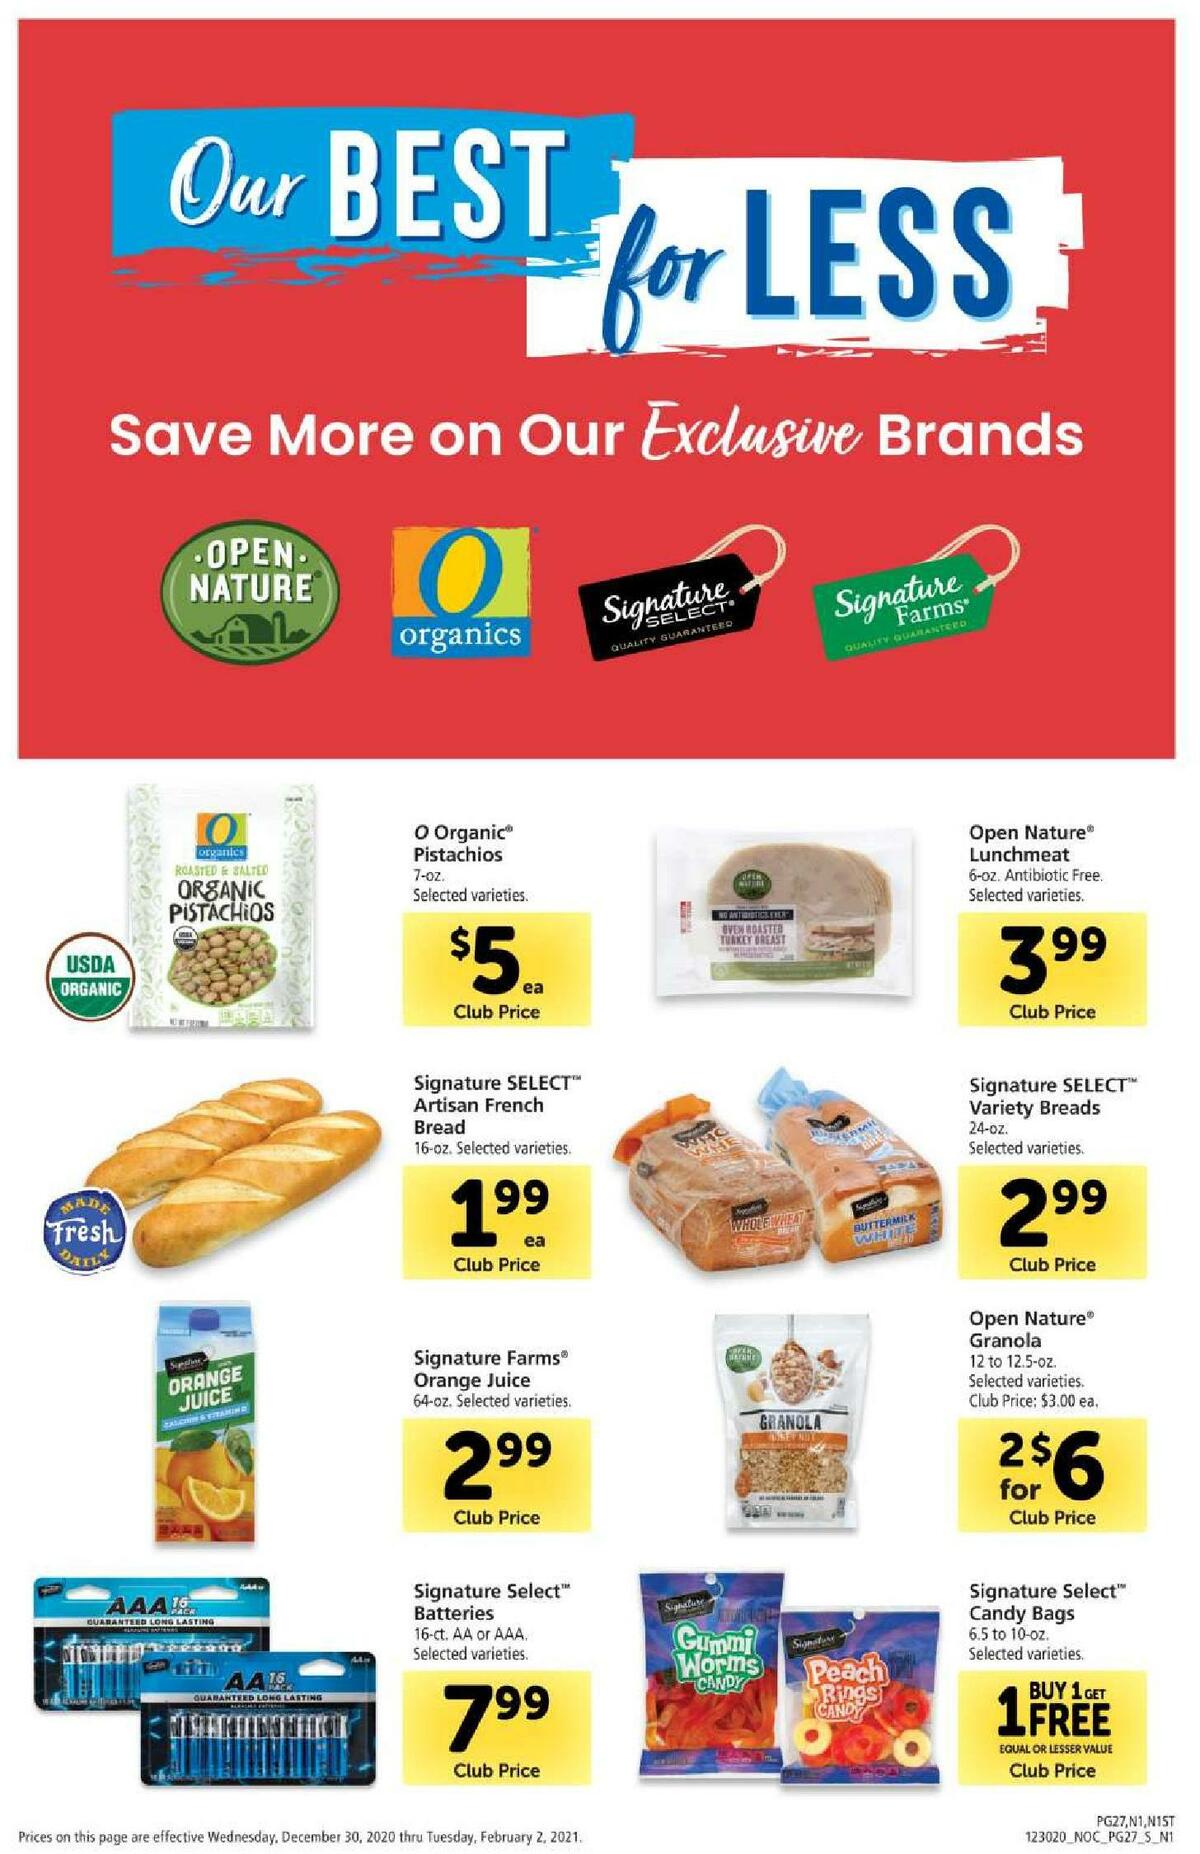 Safeway Big Book of Savings Weekly Ad from December 30